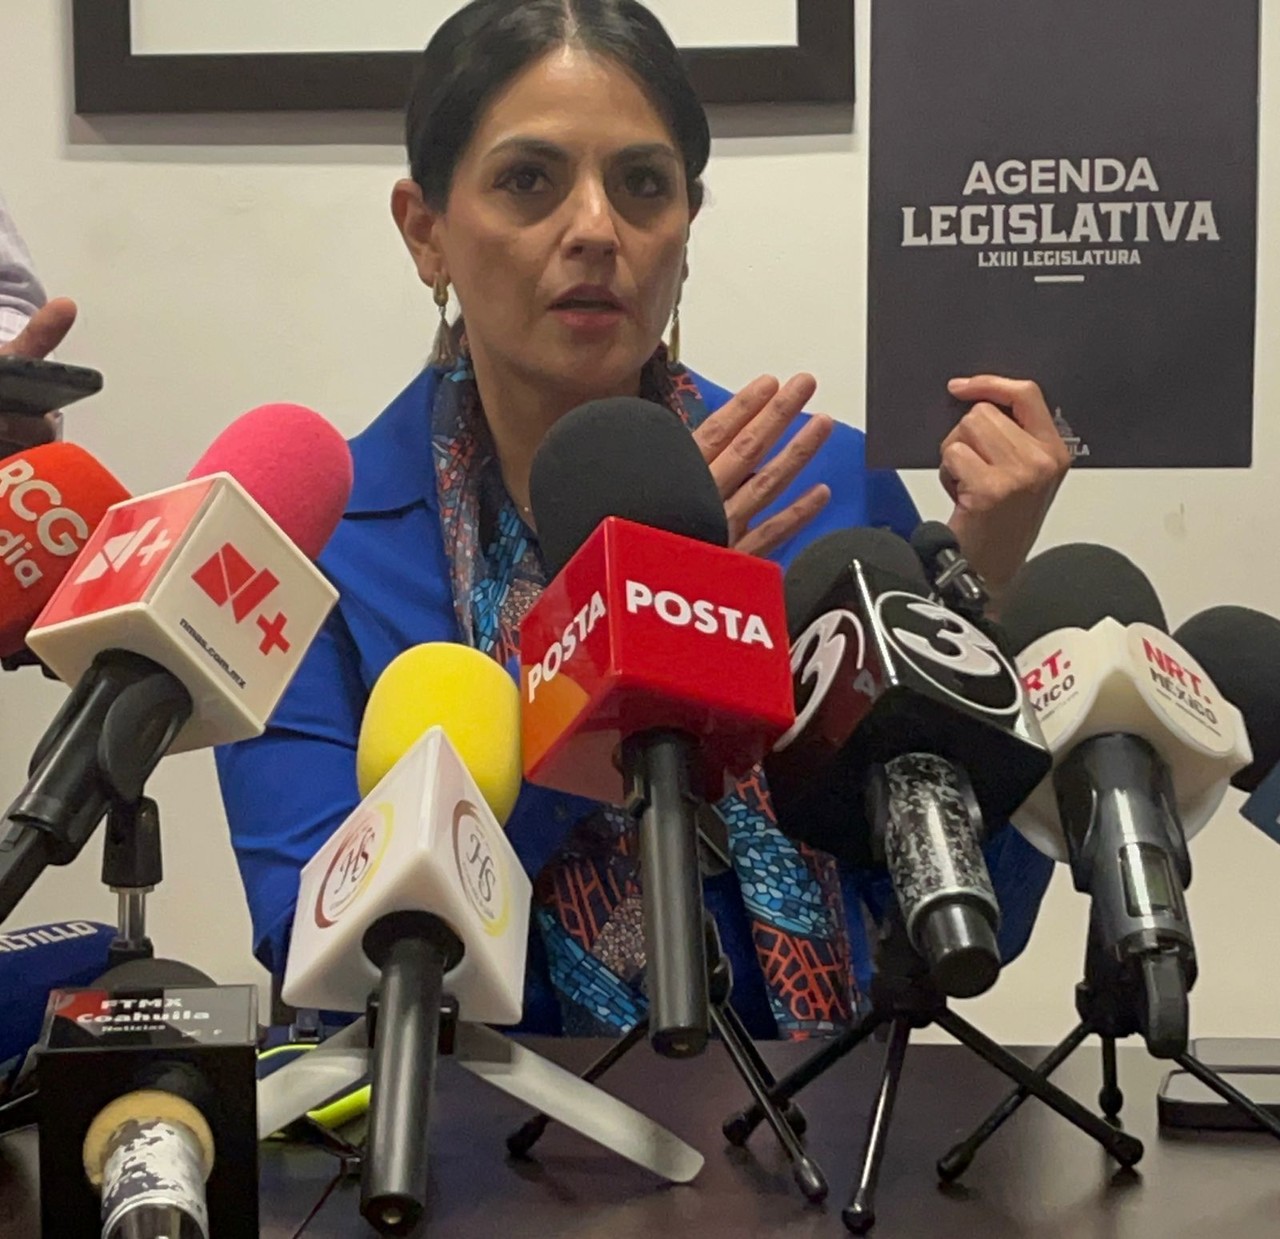 Presenta Congreso de Coahuila Agenda Legislativa